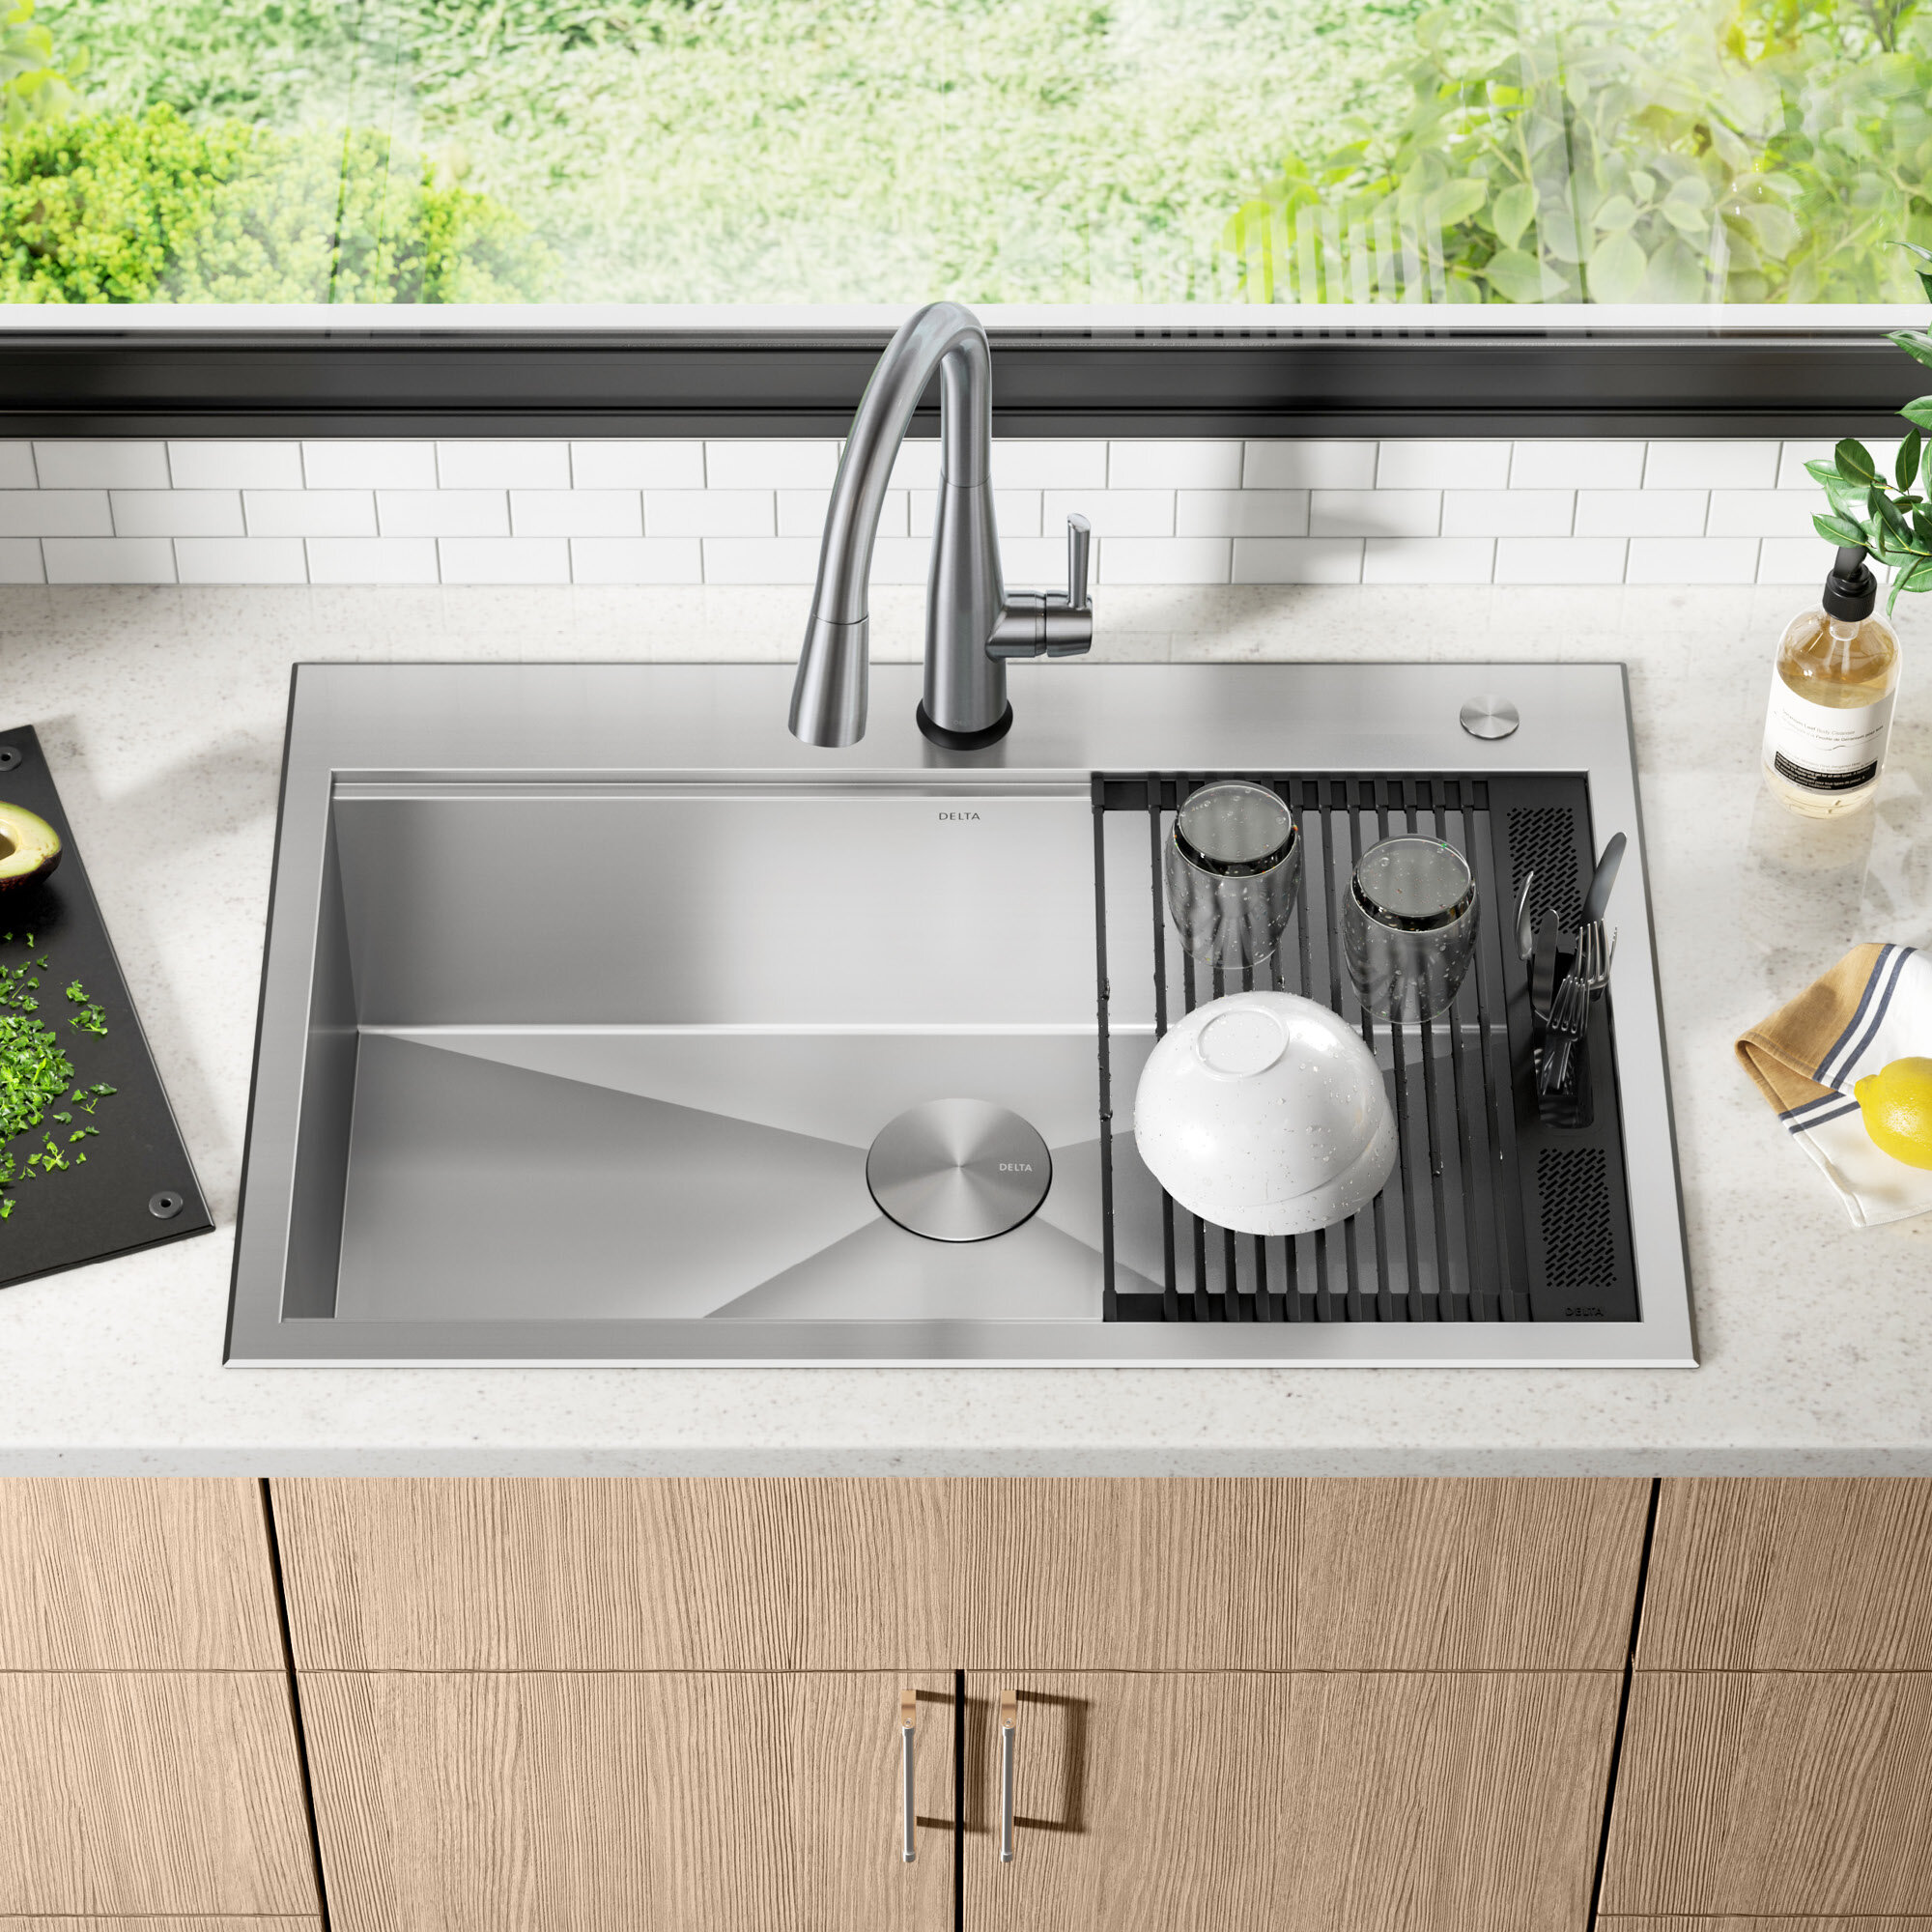 Workstation Sink Accessory - 15 Dishwasher Safe White Cutting Board (